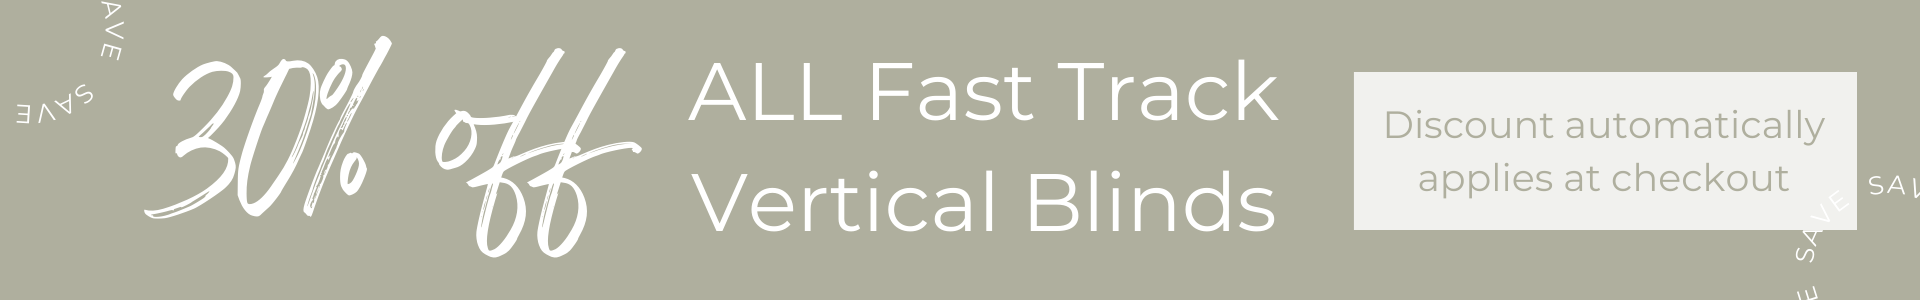 Fast Track Vertical Blinds